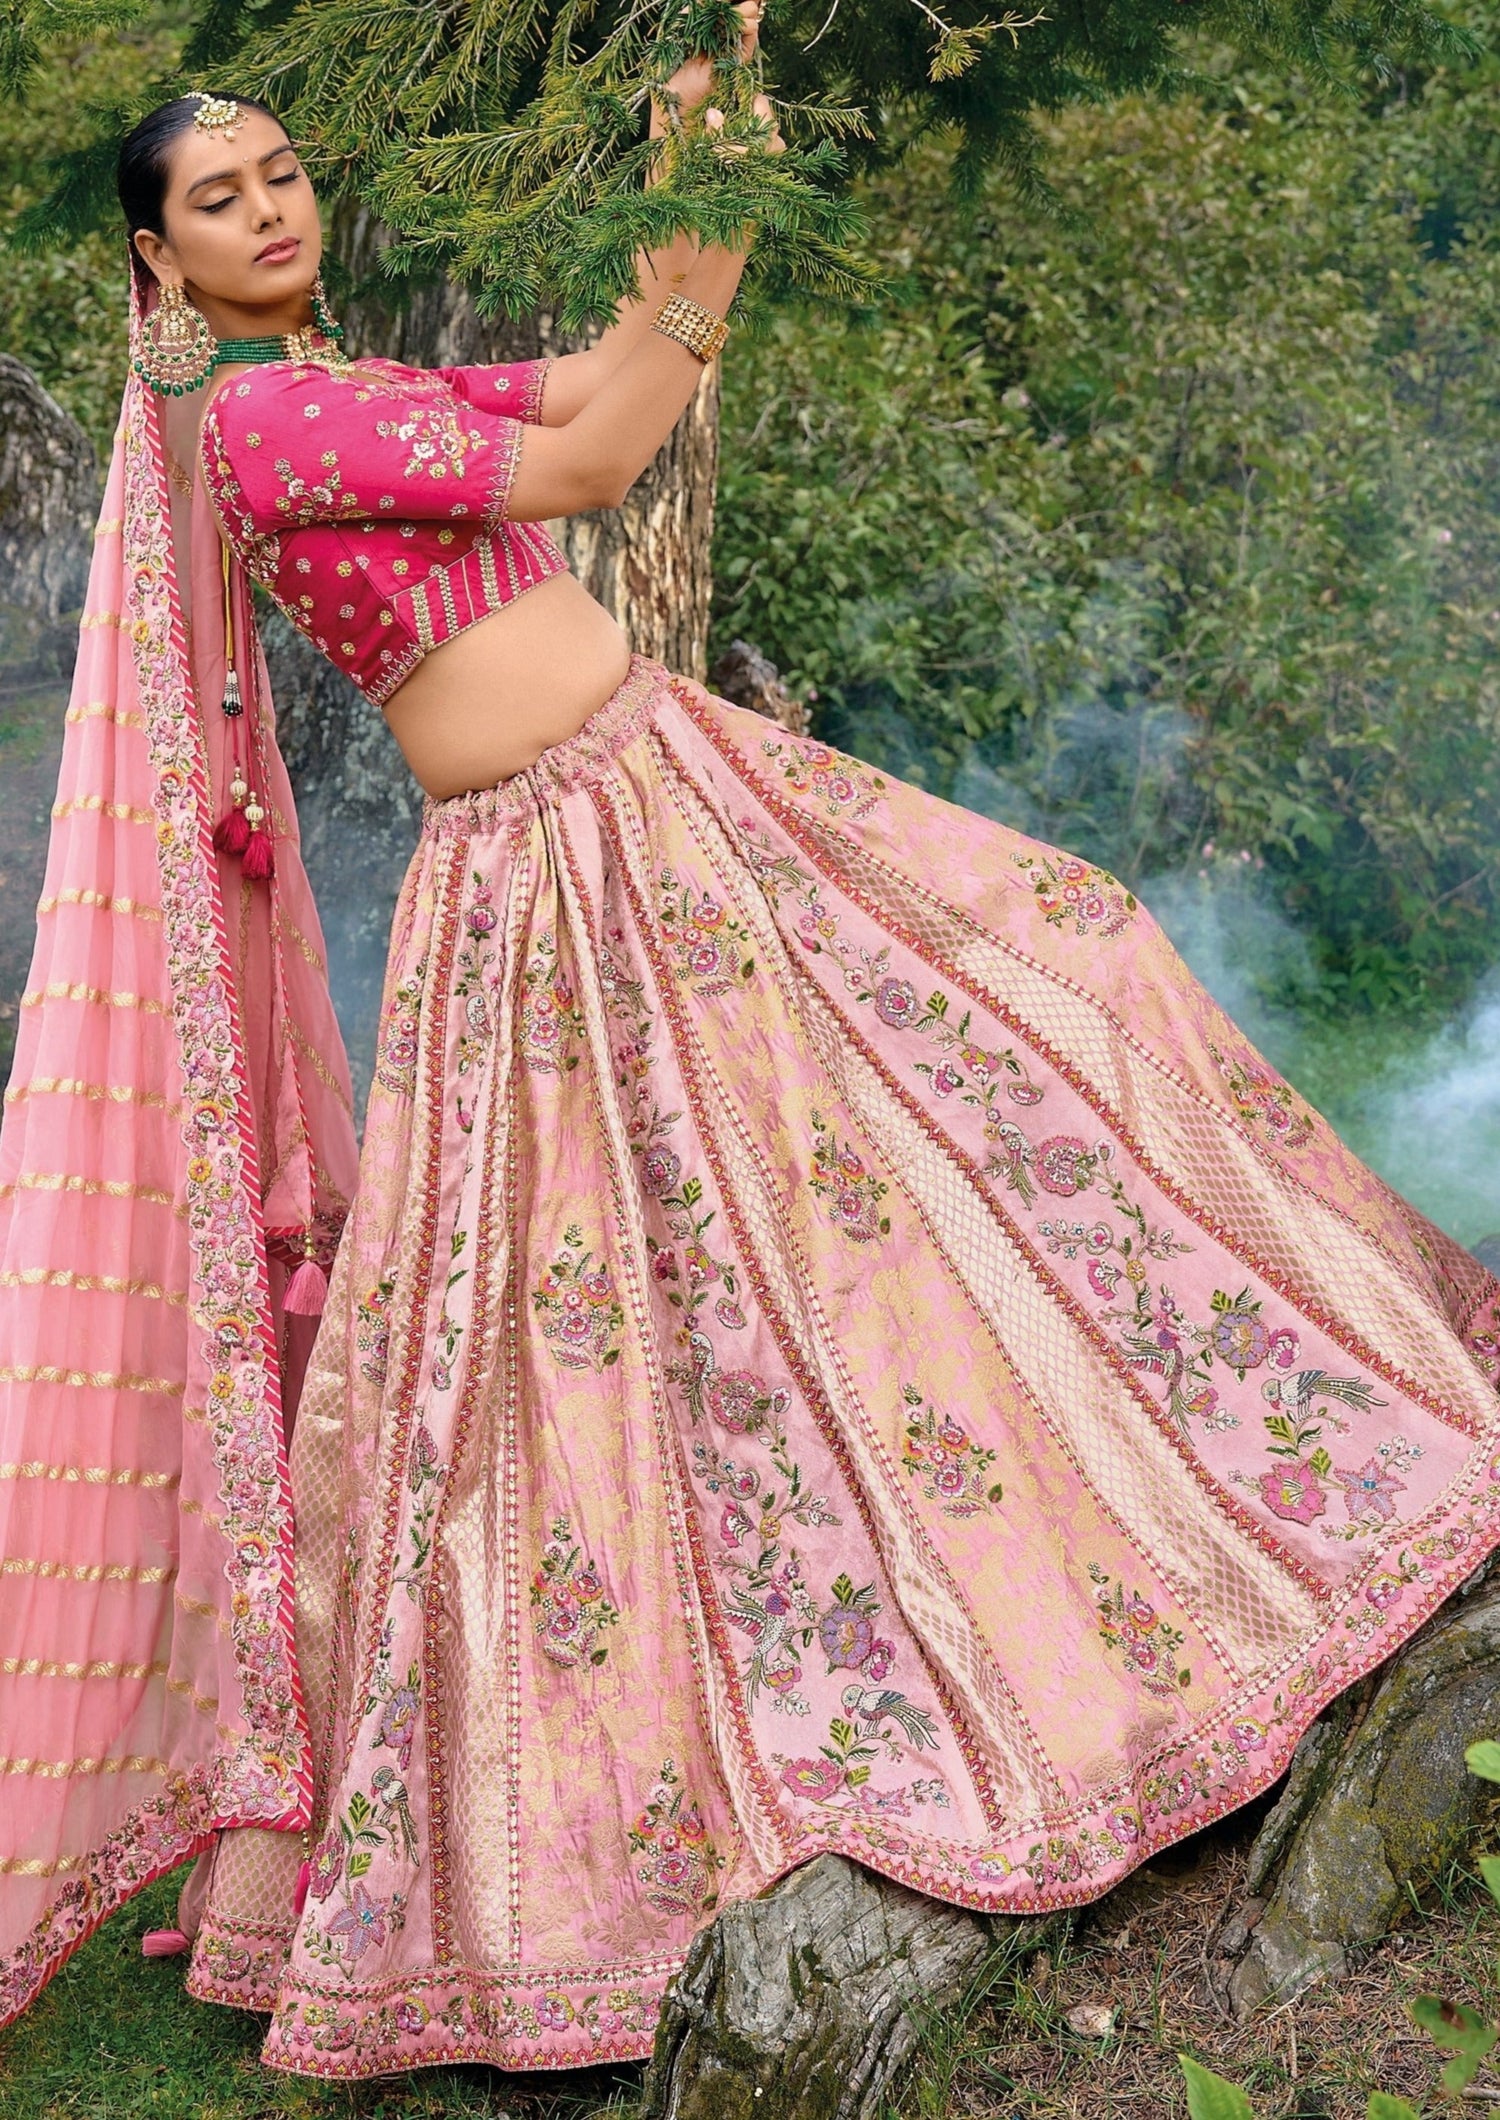 Buy Magnificent Rani Pink Lehenga Online in India @Mohey - Lehenga for Women